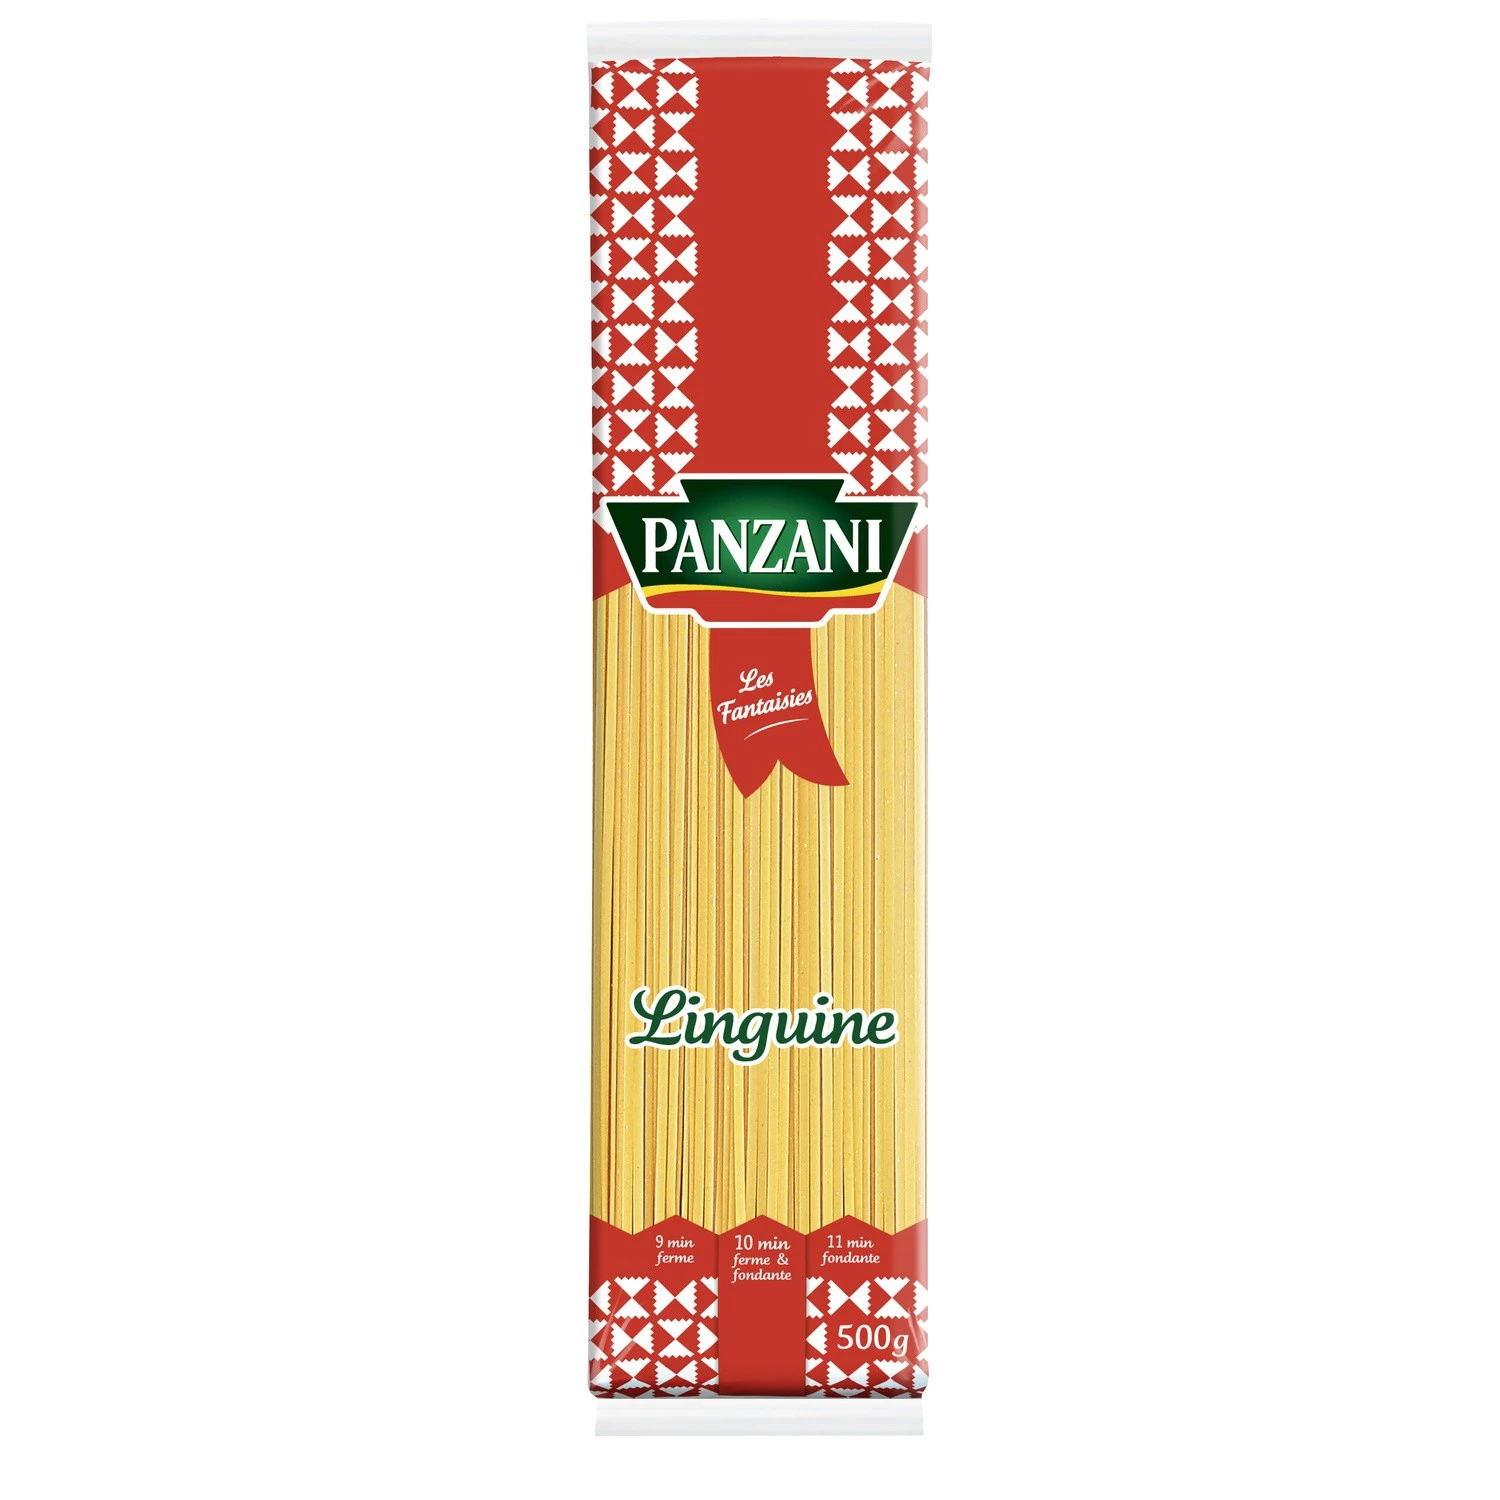 Linguine spaghetti 意面 500g - PANZANI